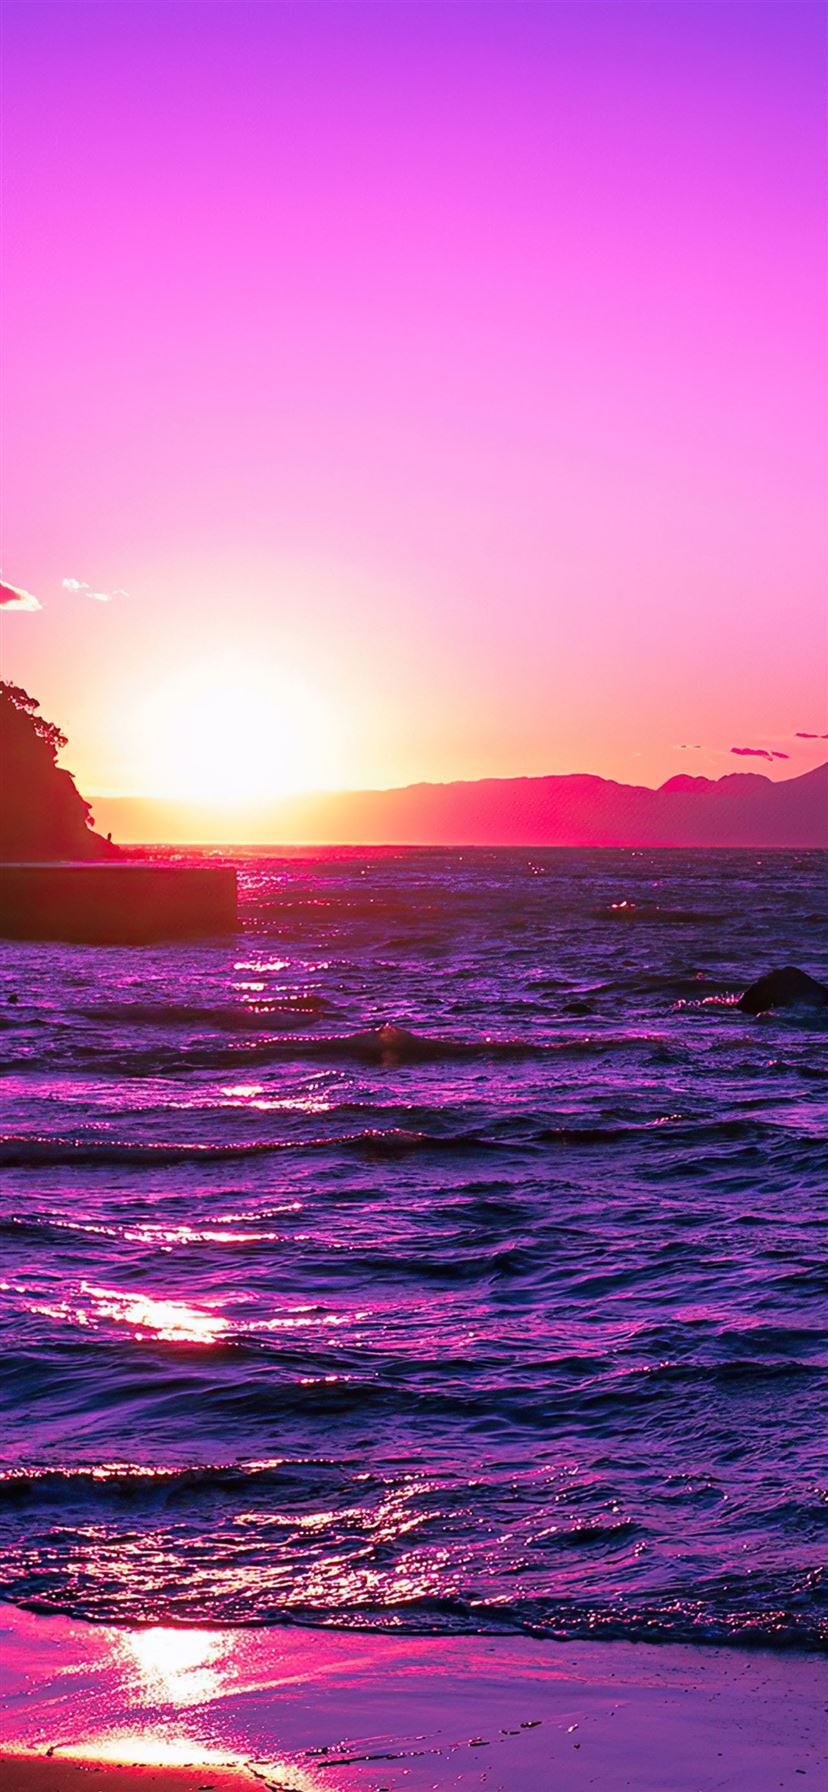 beautiful evening purple sunset 4k iPhone 11 Wallpaper Free Download